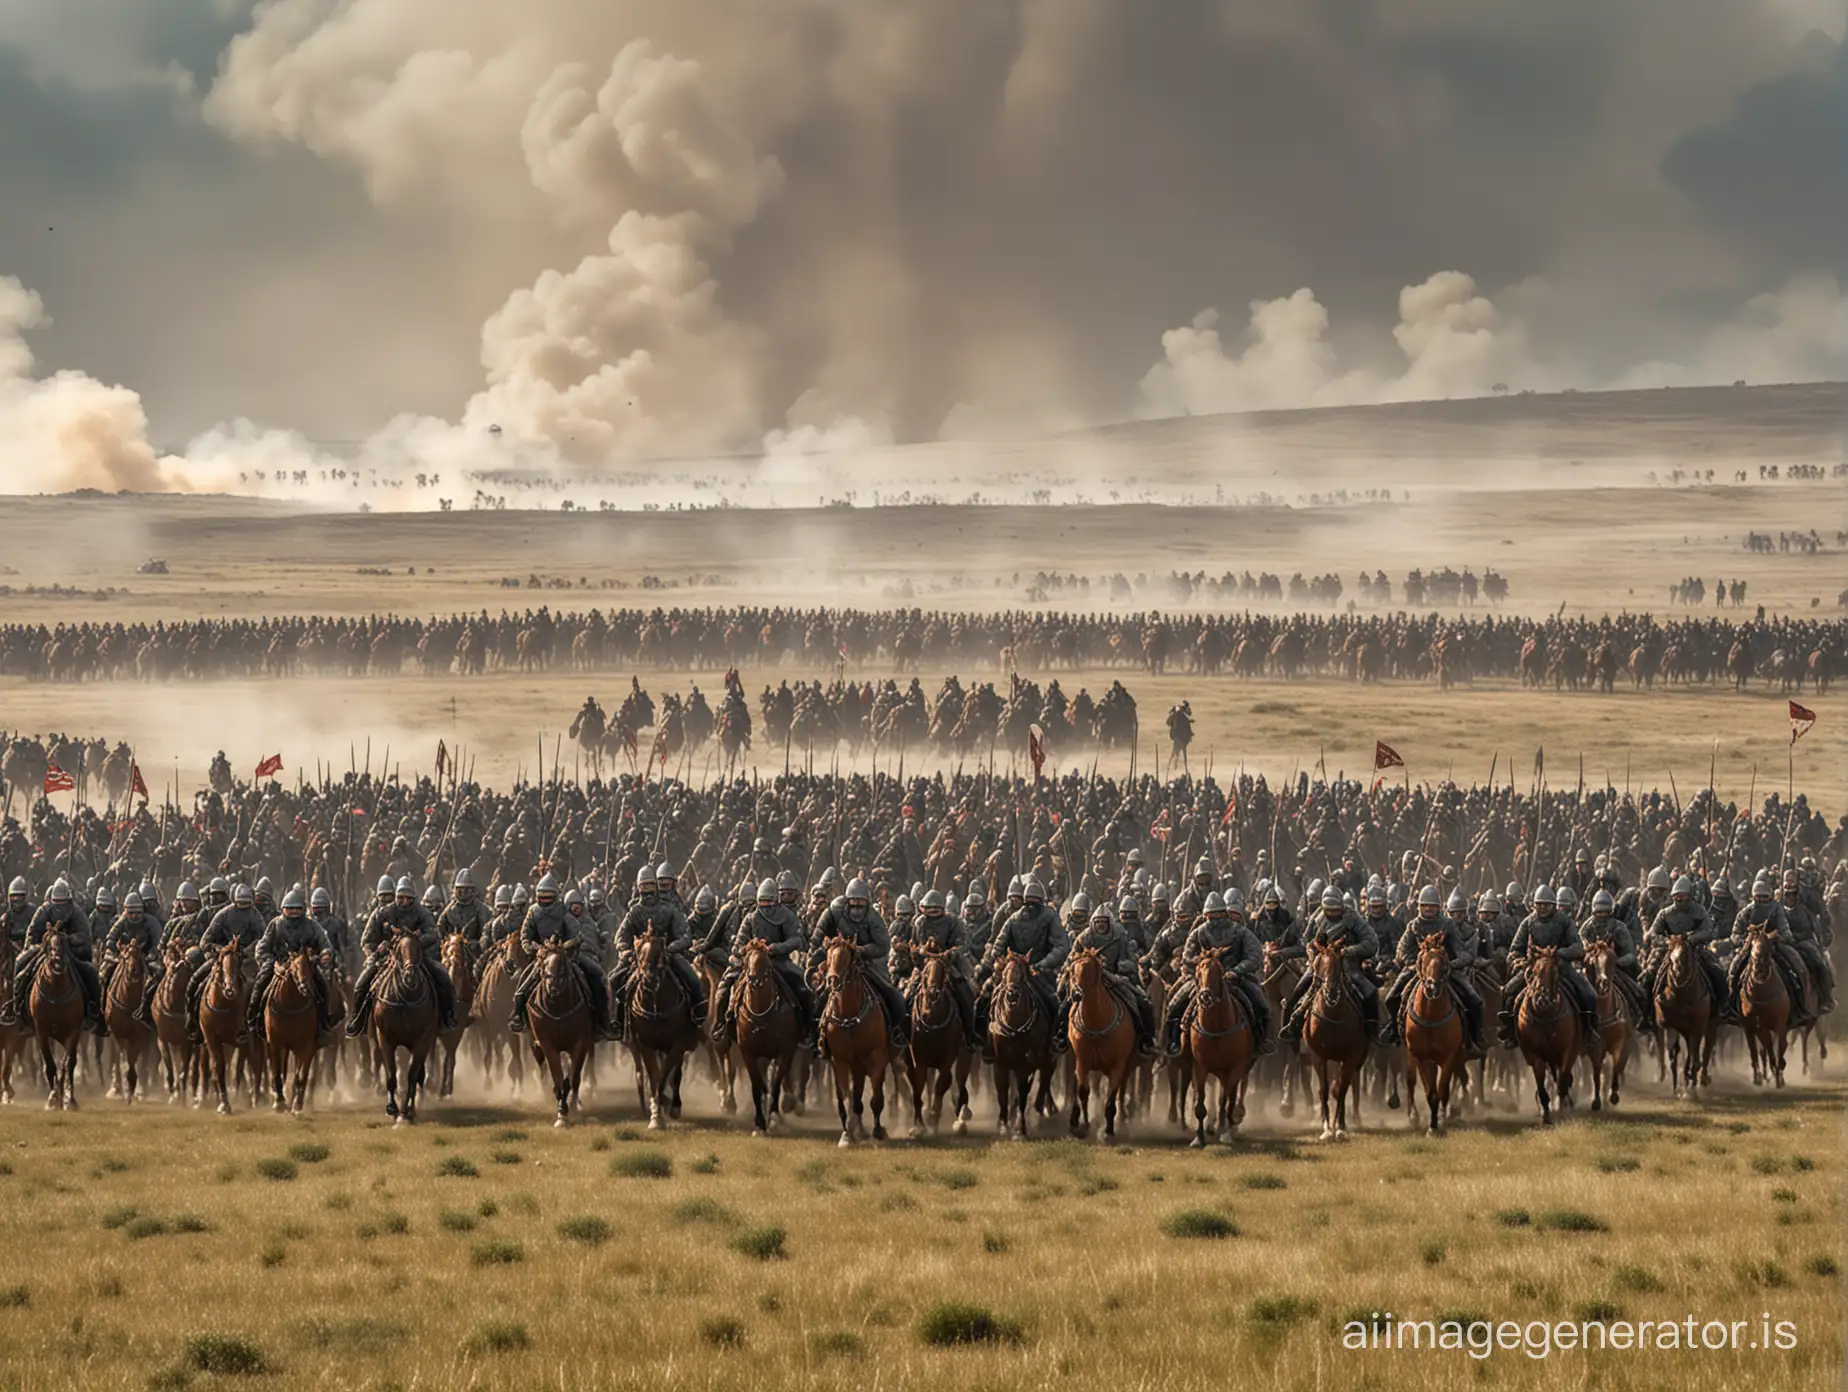 Epic-Battle-Scene-Mighty-Army-on-Horseback-Confronting-Foe